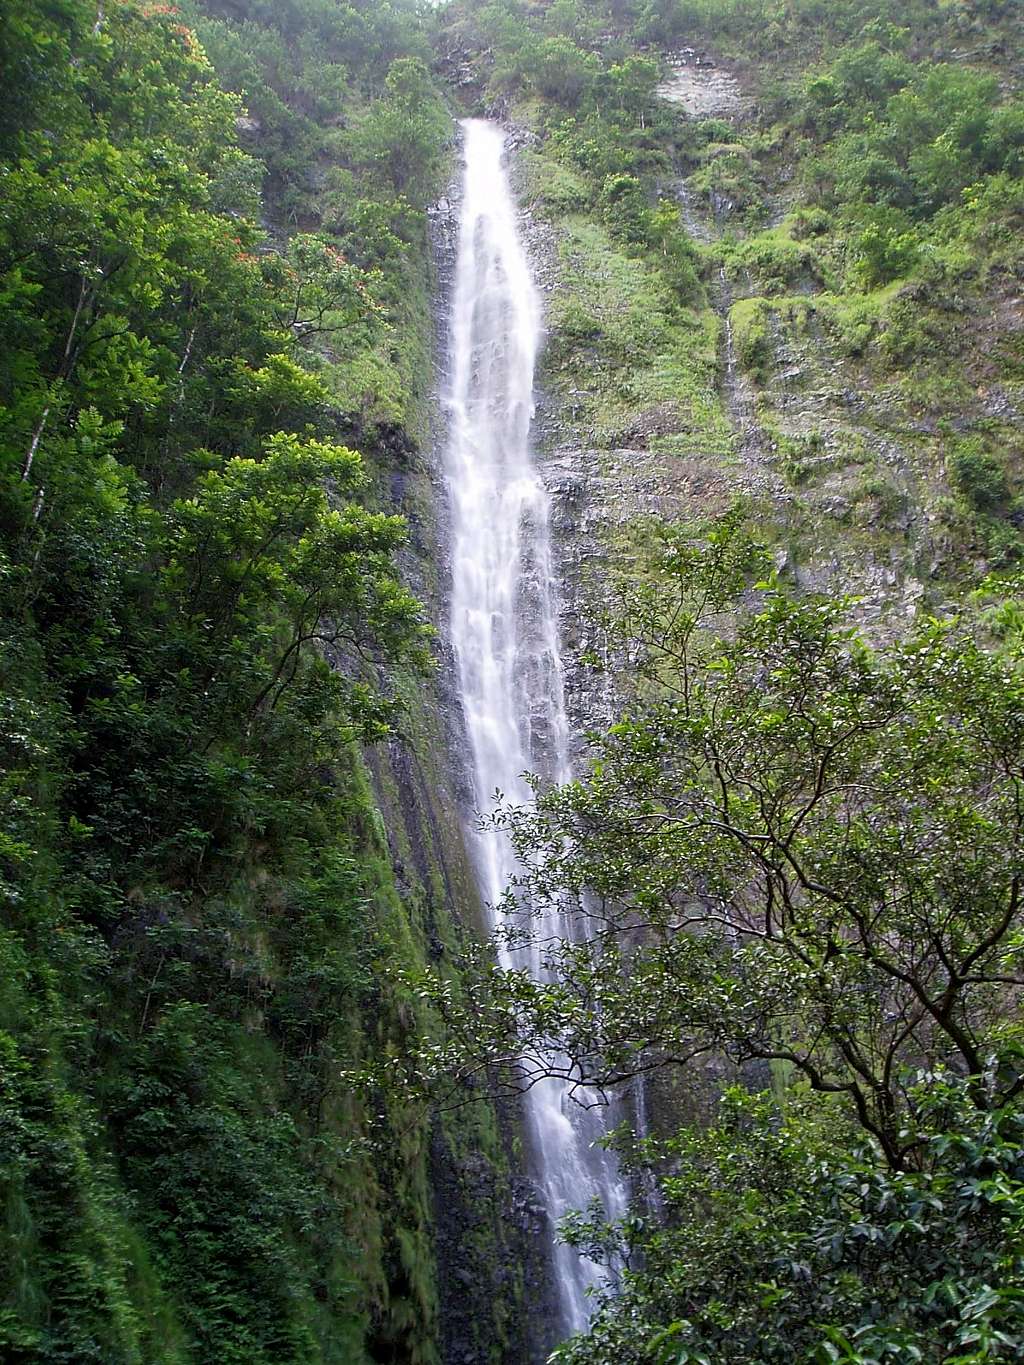 400' waterfall